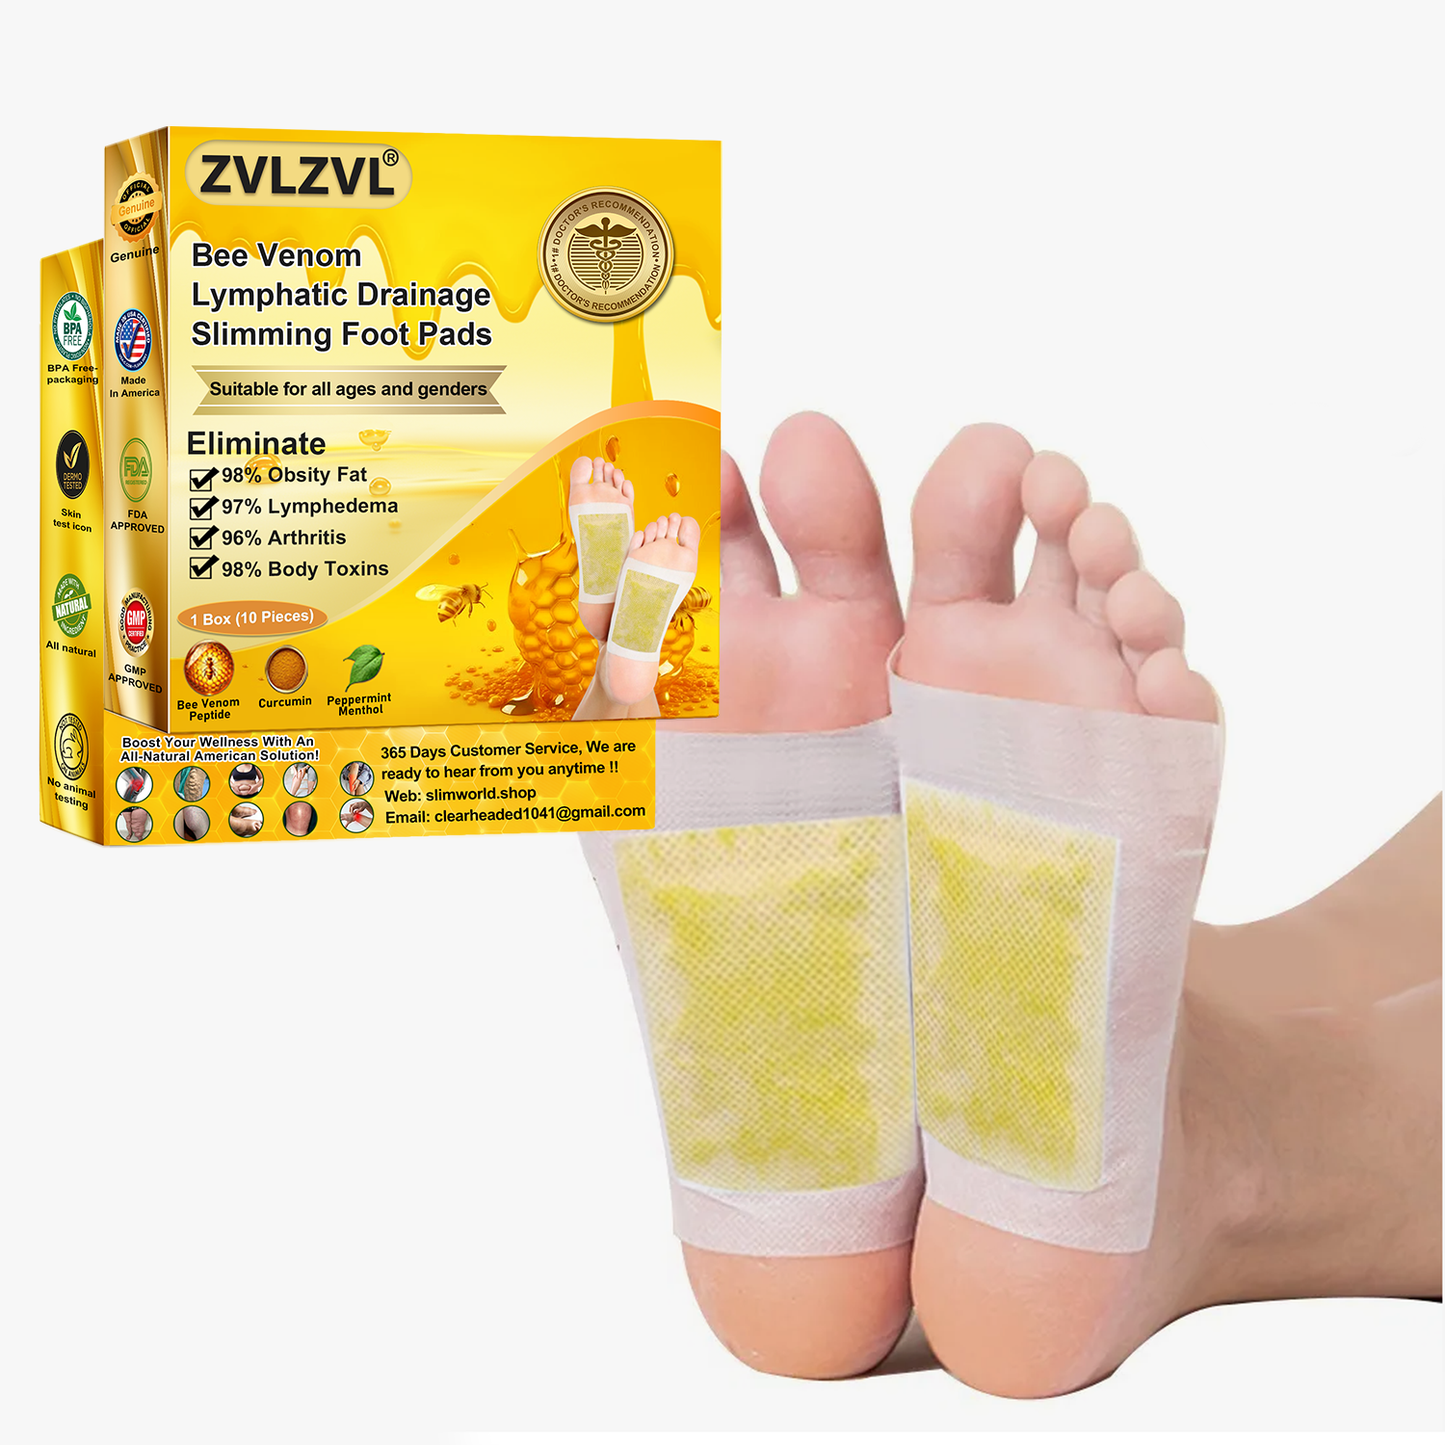 🔥❤️𝐋𝐢𝐦𝐢𝐭𝐞𝐝 𝐭𝐢𝐦𝐞 8𝟎% 𝐎𝐅𝐅 👨‍⚕🌿ZVLZVL® 𝐁𝐞𝐞 𝐕𝐞𝐧𝐨𝐦 𝐋𝐲𝐦𝐩𝐡𝐚𝐭𝐢𝐜 Detox Slimming Foot Pads  (𝚂𝚞𝚒𝚝𝚊𝚋𝚕𝚎 𝚏𝚘𝚛 𝚞𝚜𝚎 𝚋𝚢 𝚒𝚗𝚍𝚒𝚟𝚒𝚍𝚞𝚊𝚕𝚜 𝚘𝚏 𝚊𝚕𝚕 𝚊𝚐𝚎𝚜)🔥